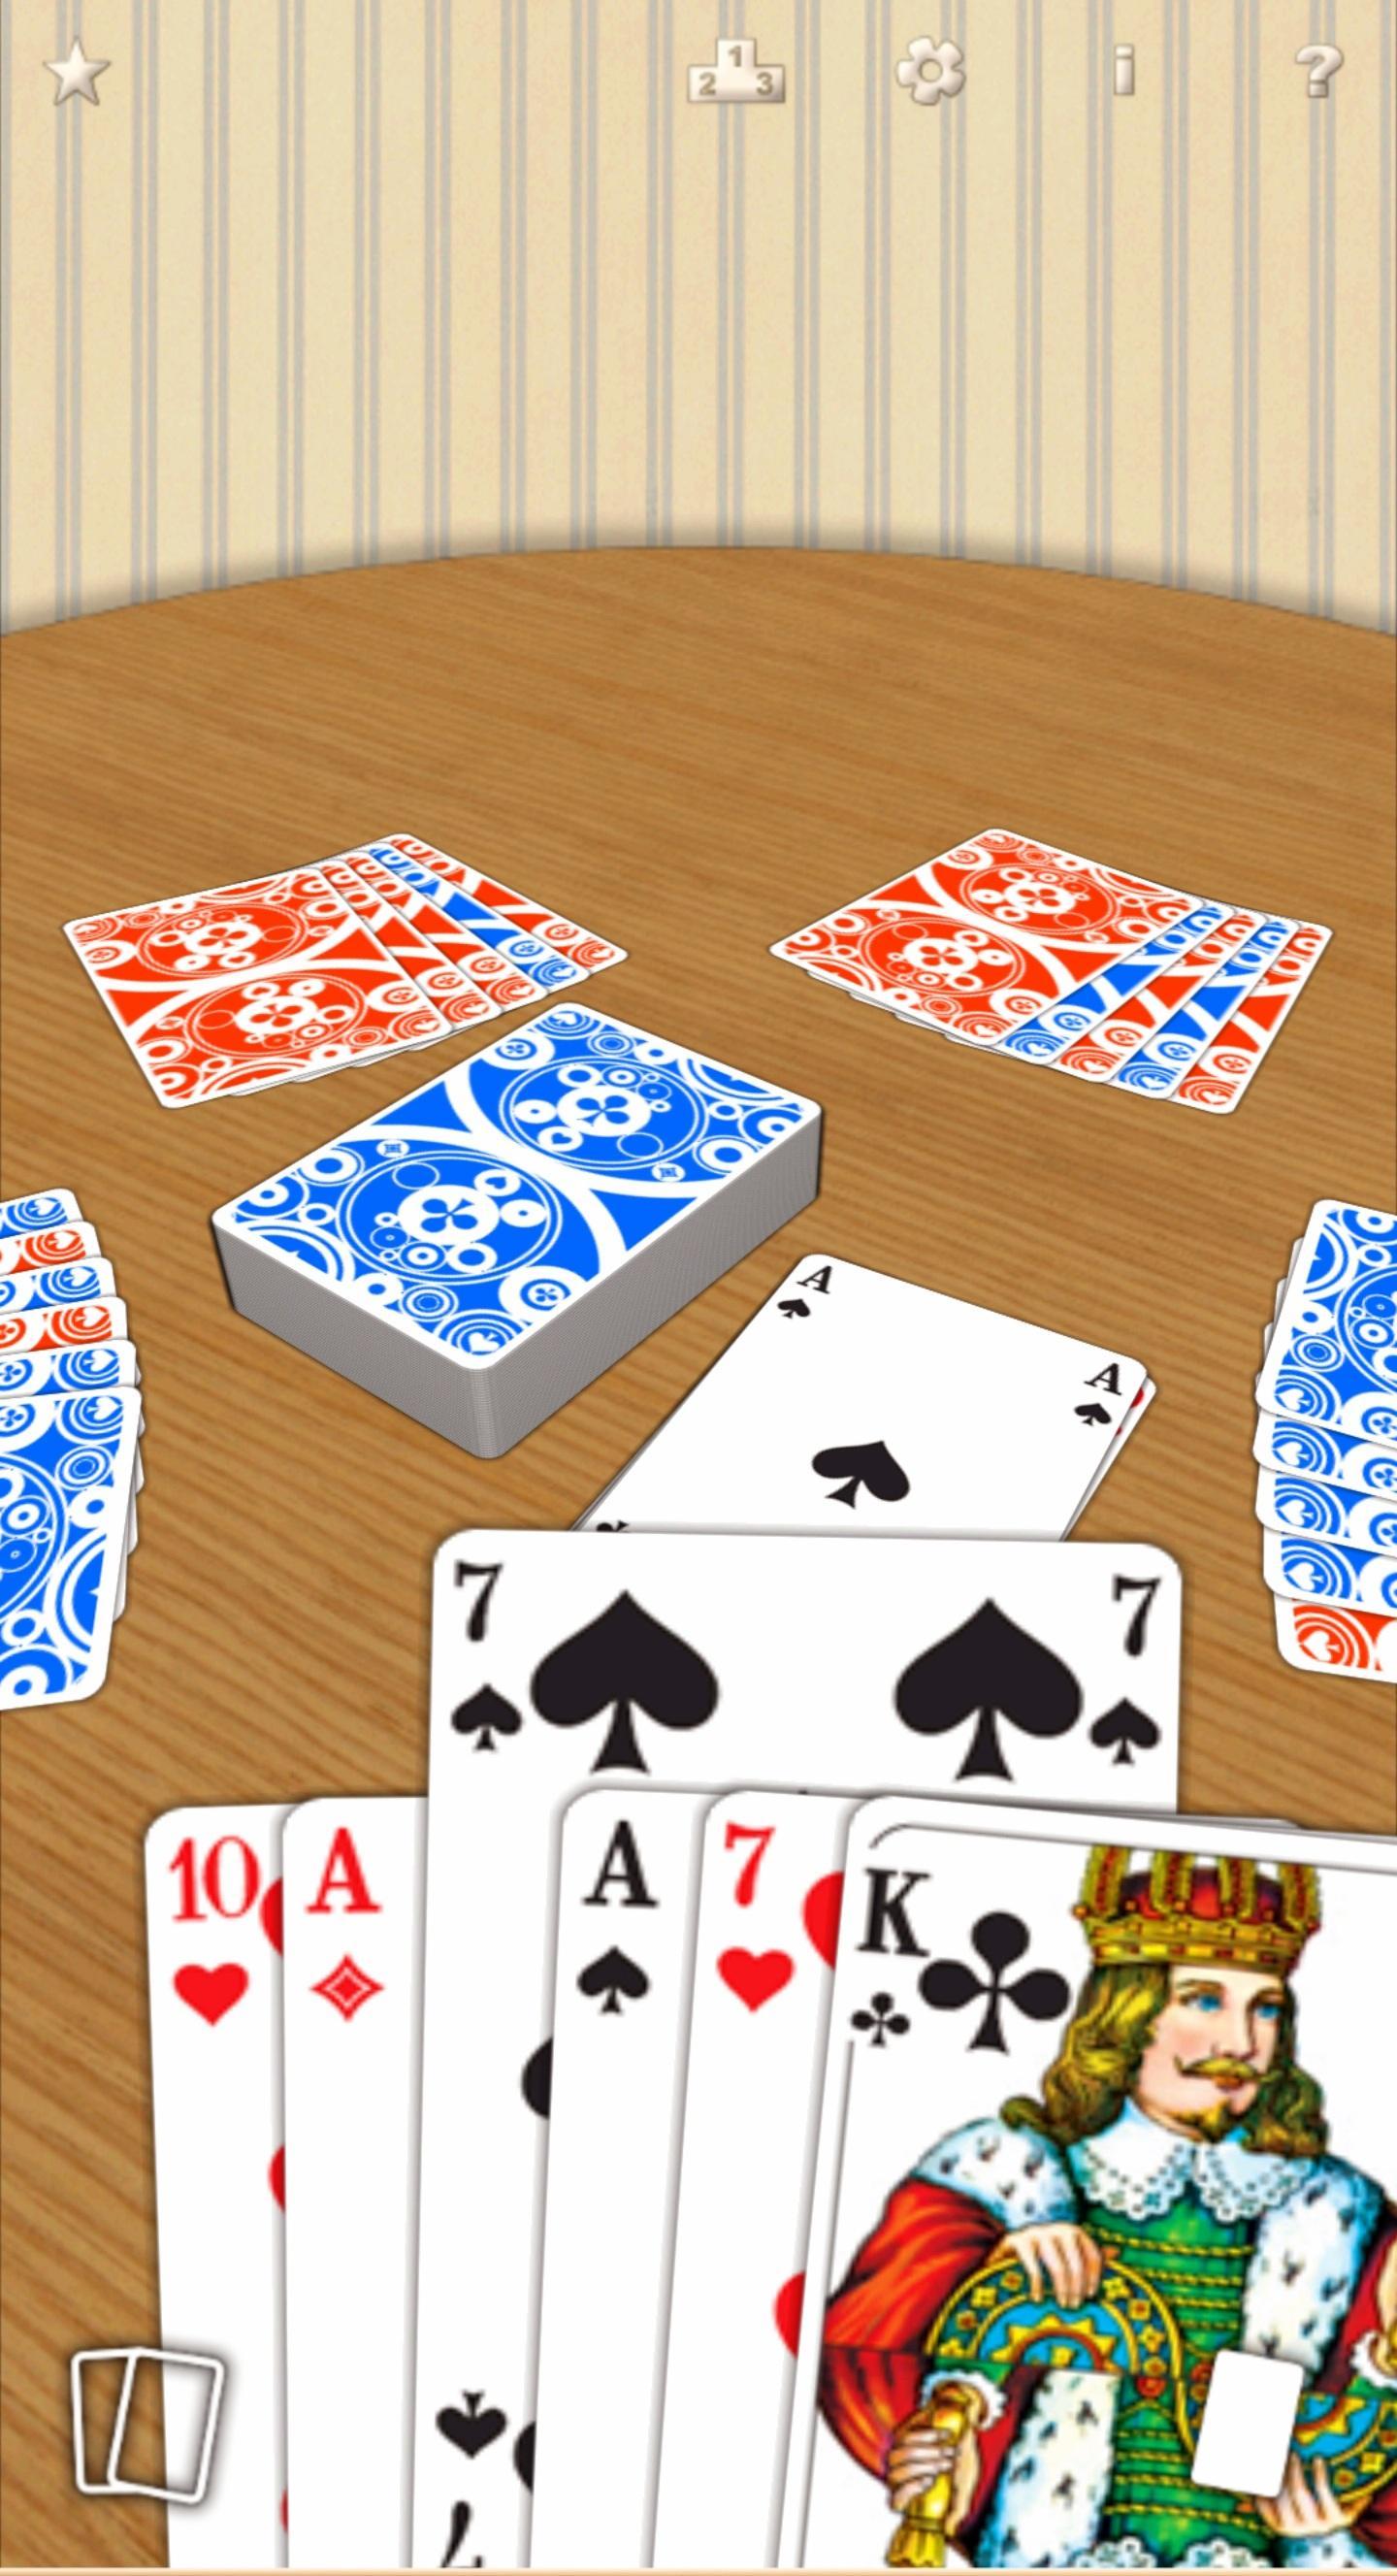 Crazy Eights free card game 1.6.96 Screenshot 20